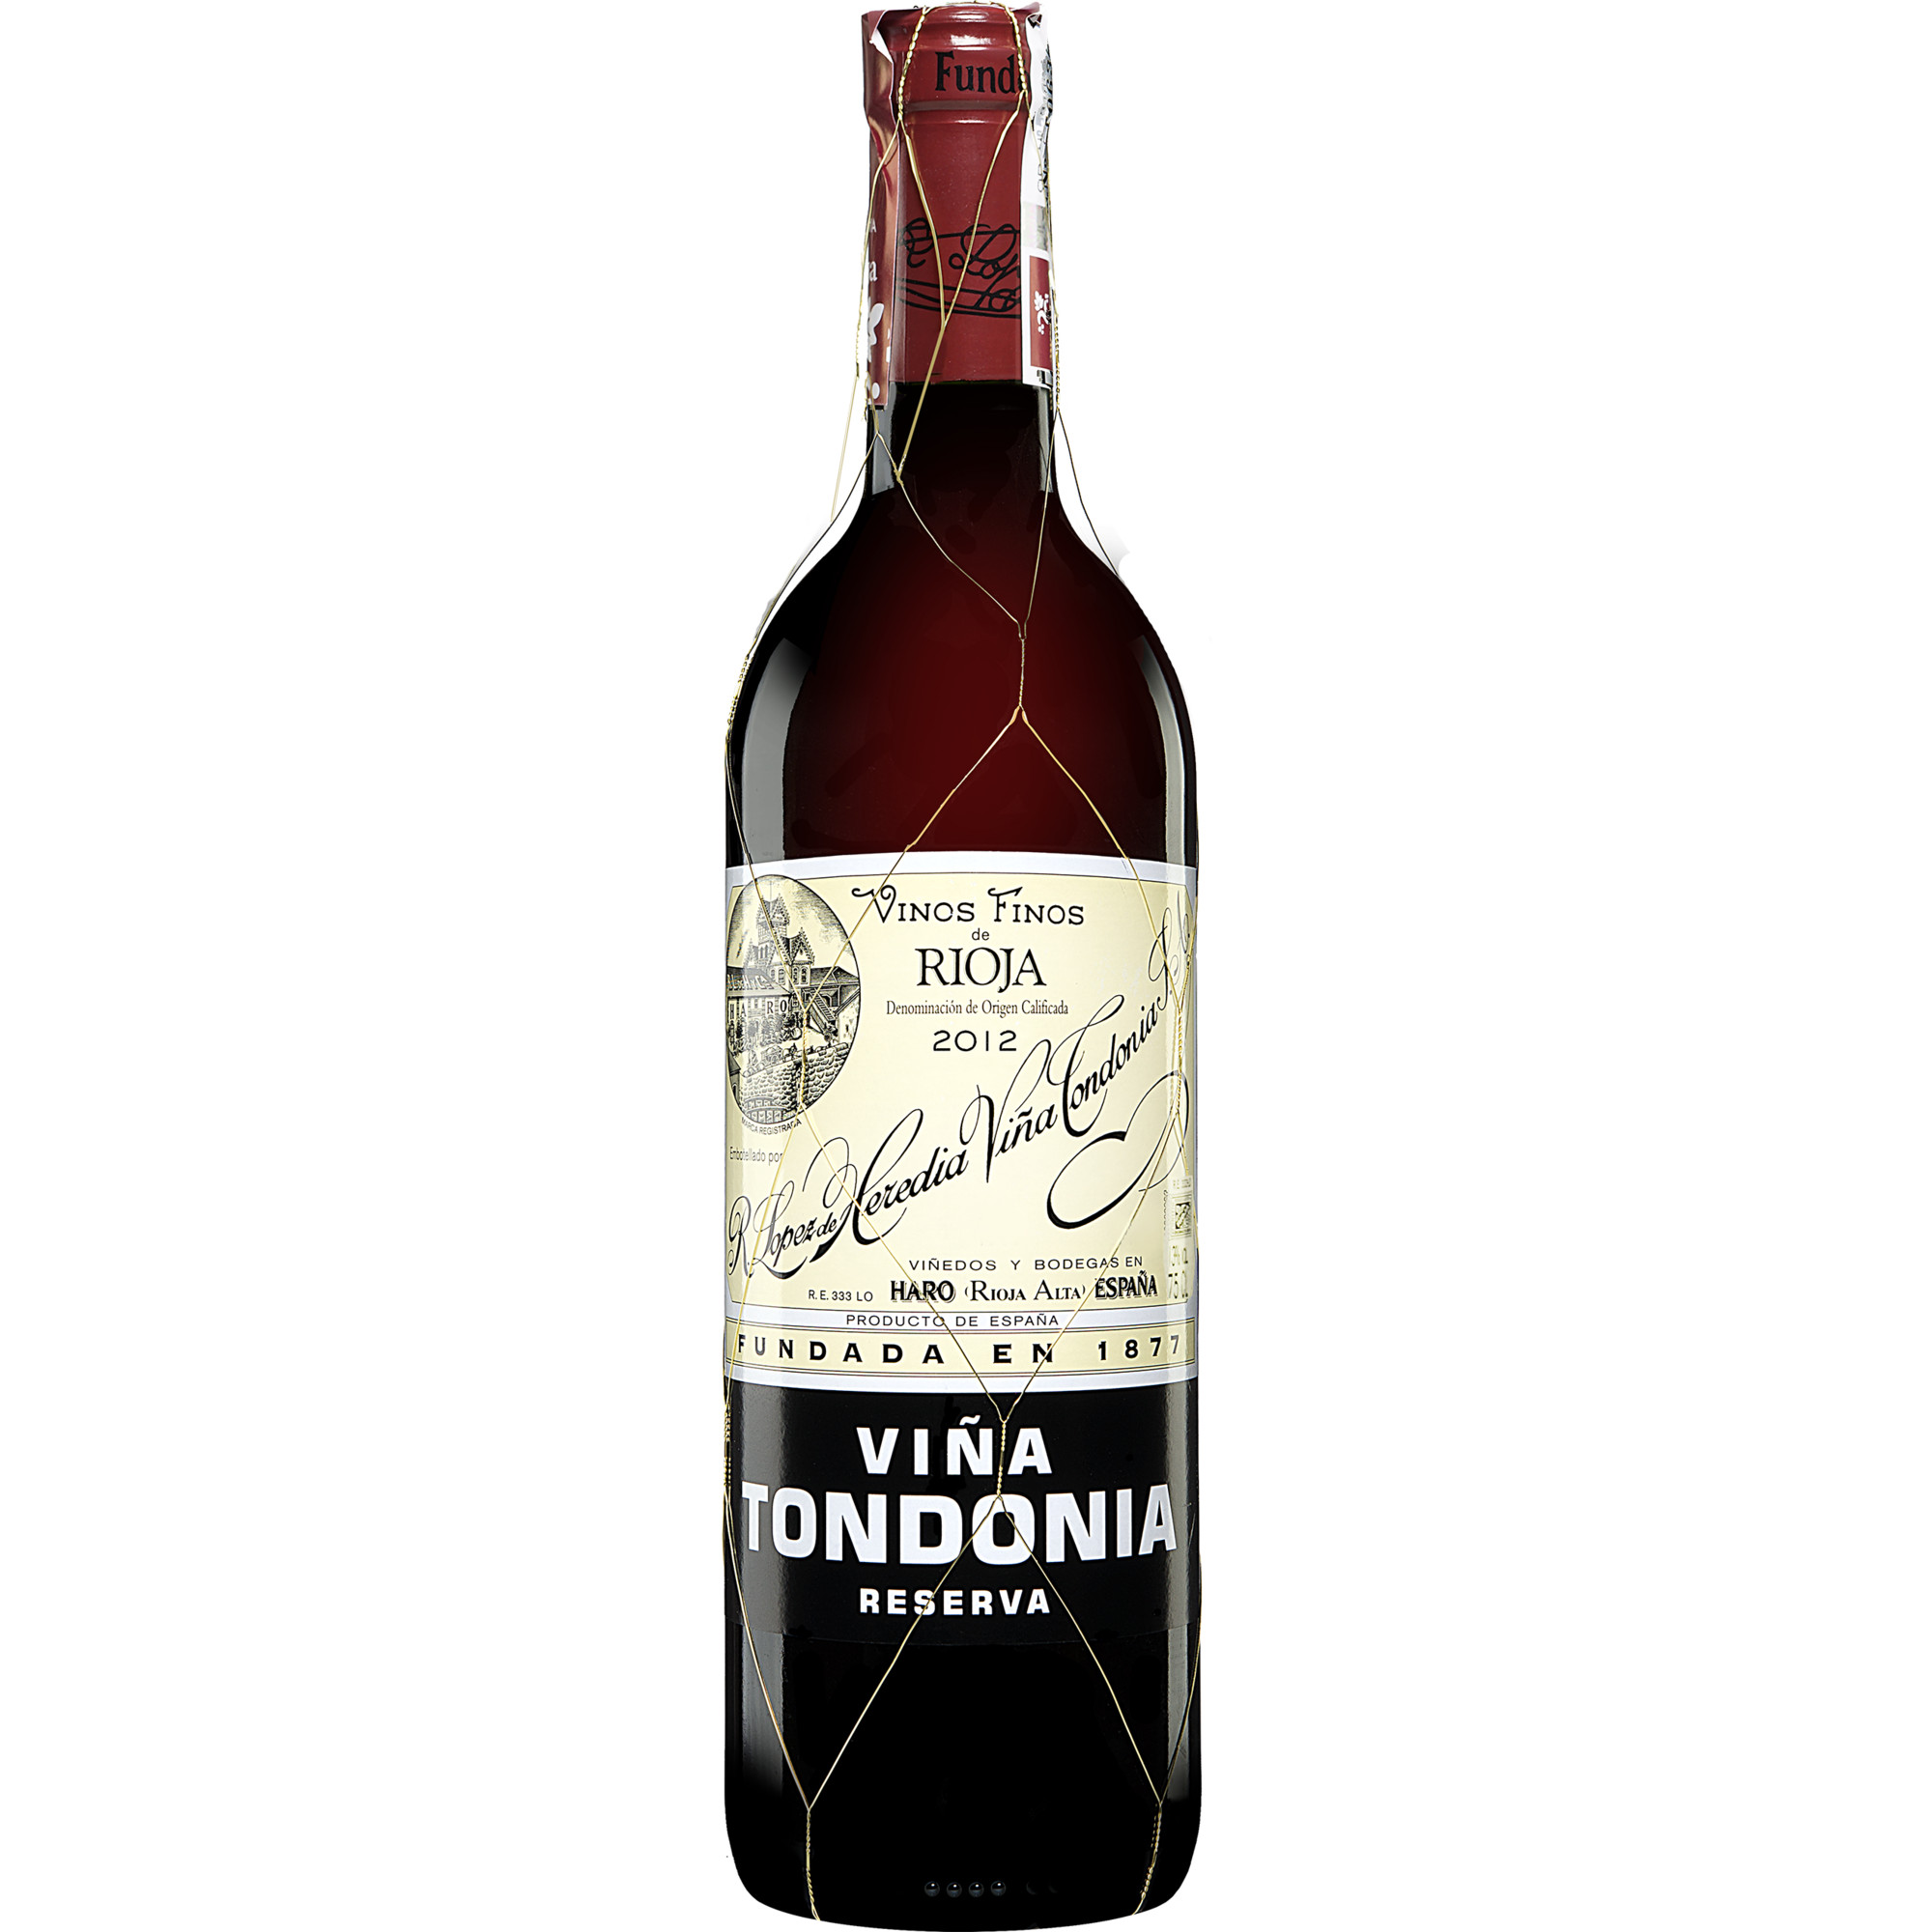 Tondonia »Viña Tondonia« Tinto Reserva 2012  013% Vol. Rotwein Trocken aus Spanien